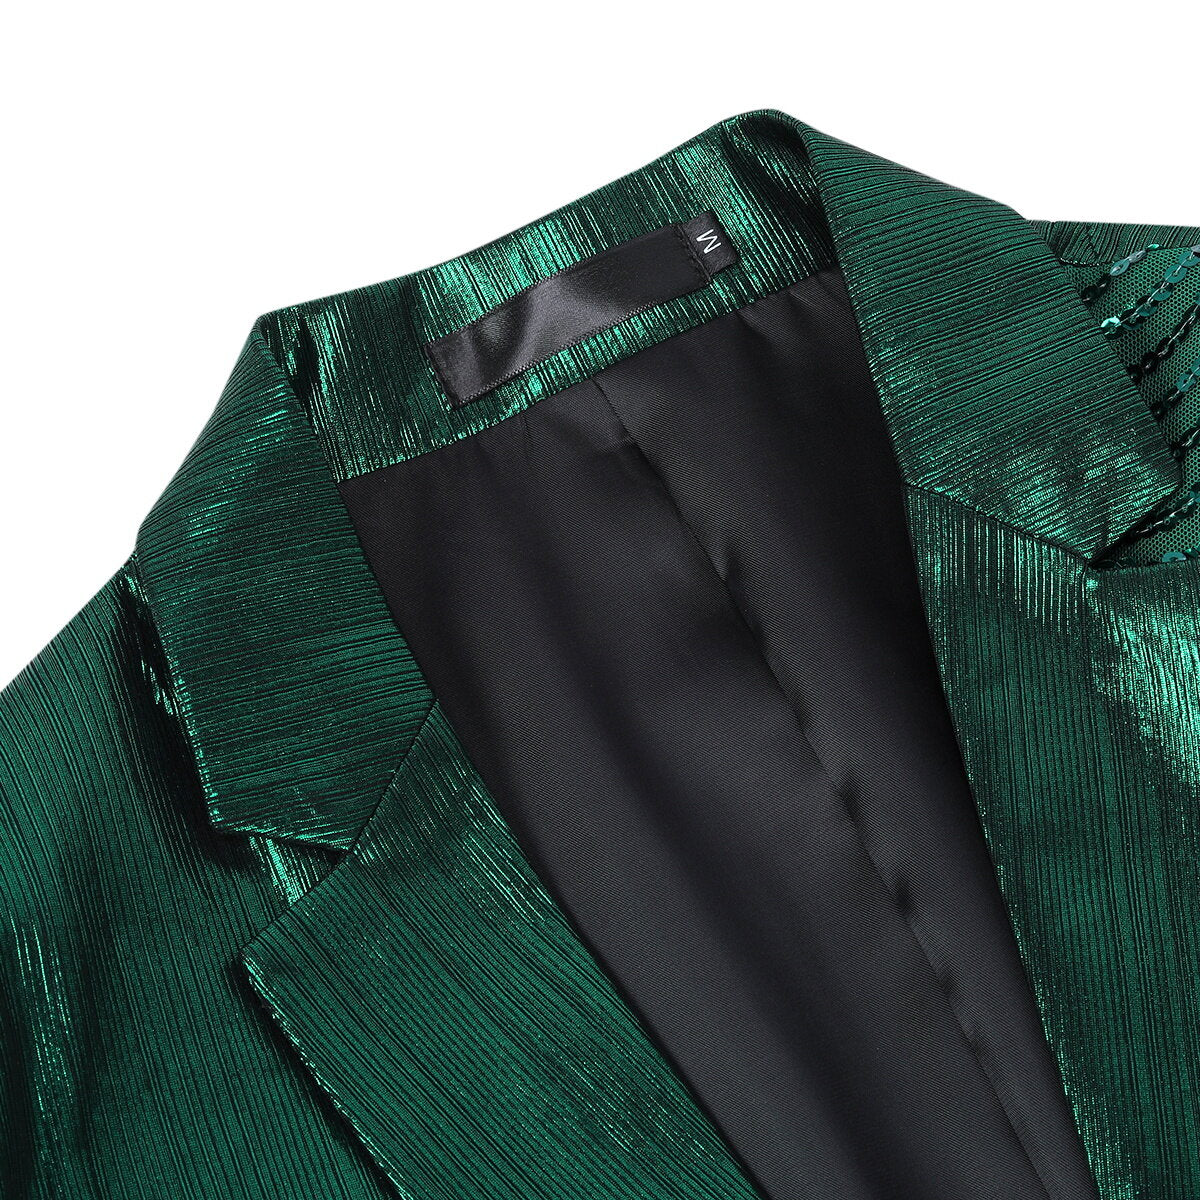 Green Slim Fit Half-Sequin Blazer